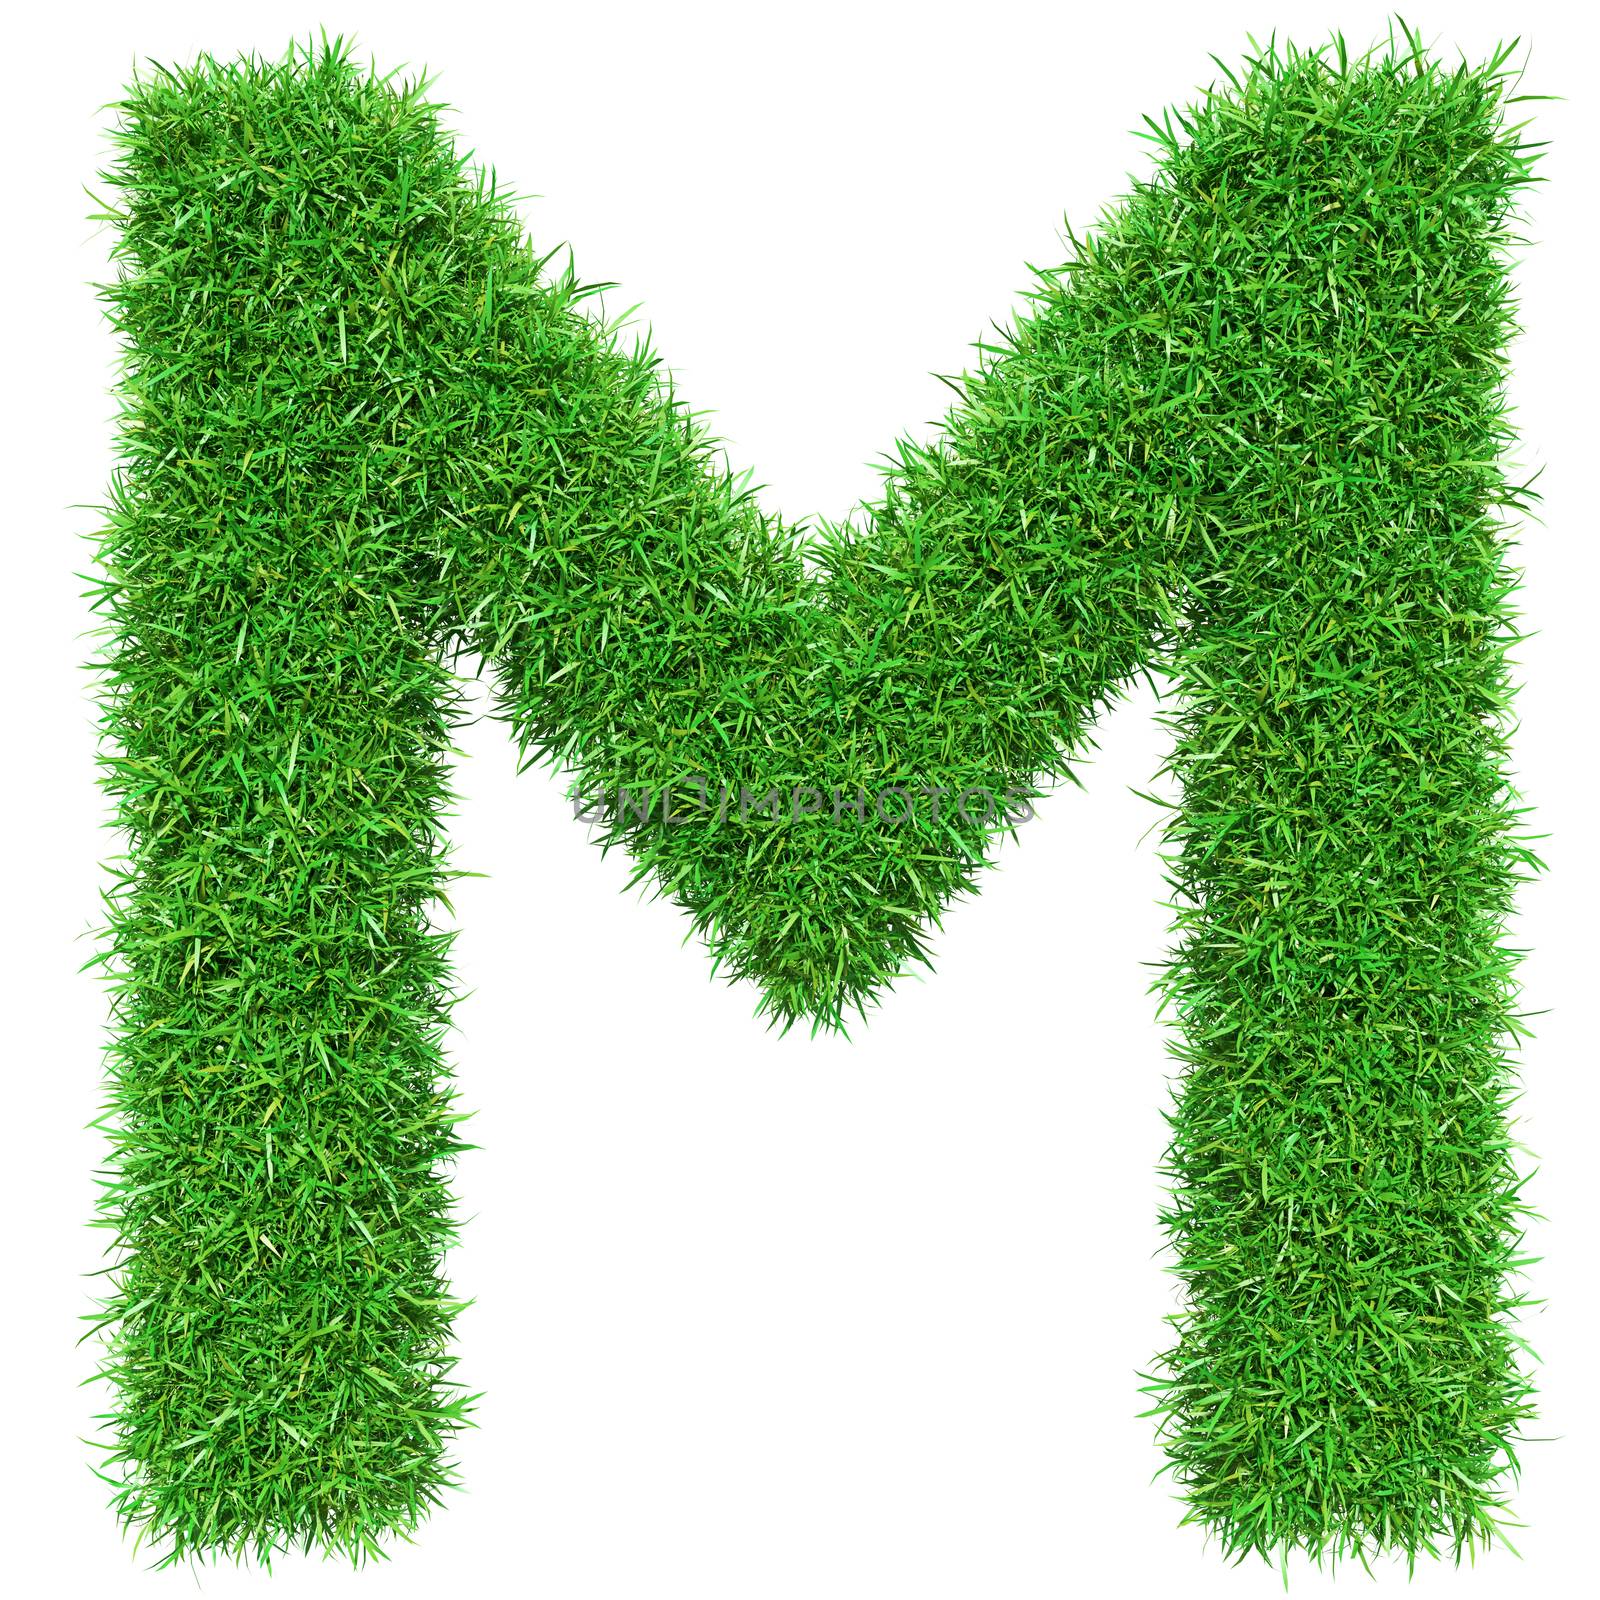 Green Grass Letter M by cherezoff